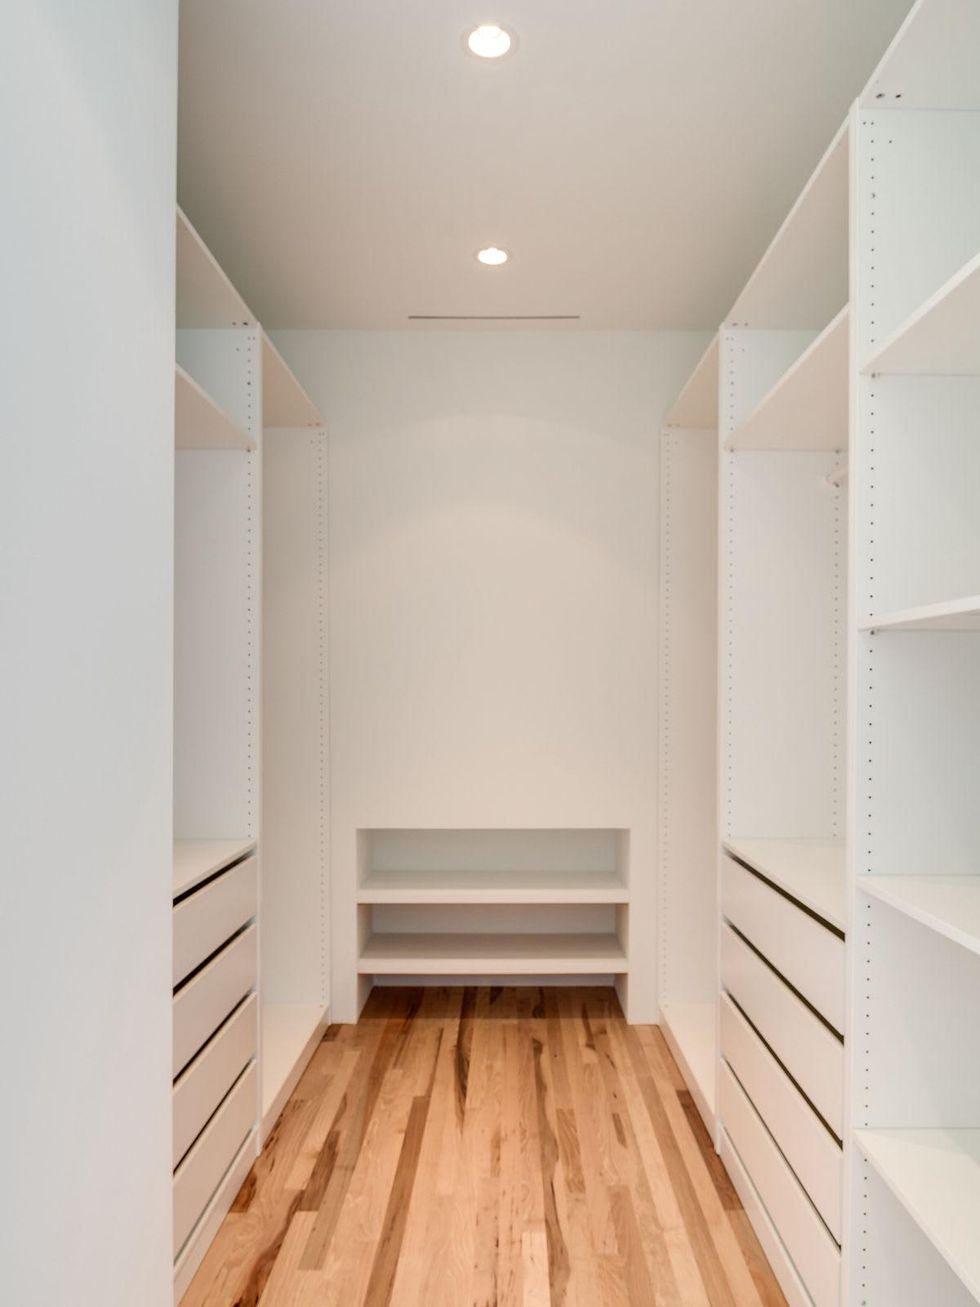 EaDo's sleek living? A striking $550,000 minimalist home offers a ...